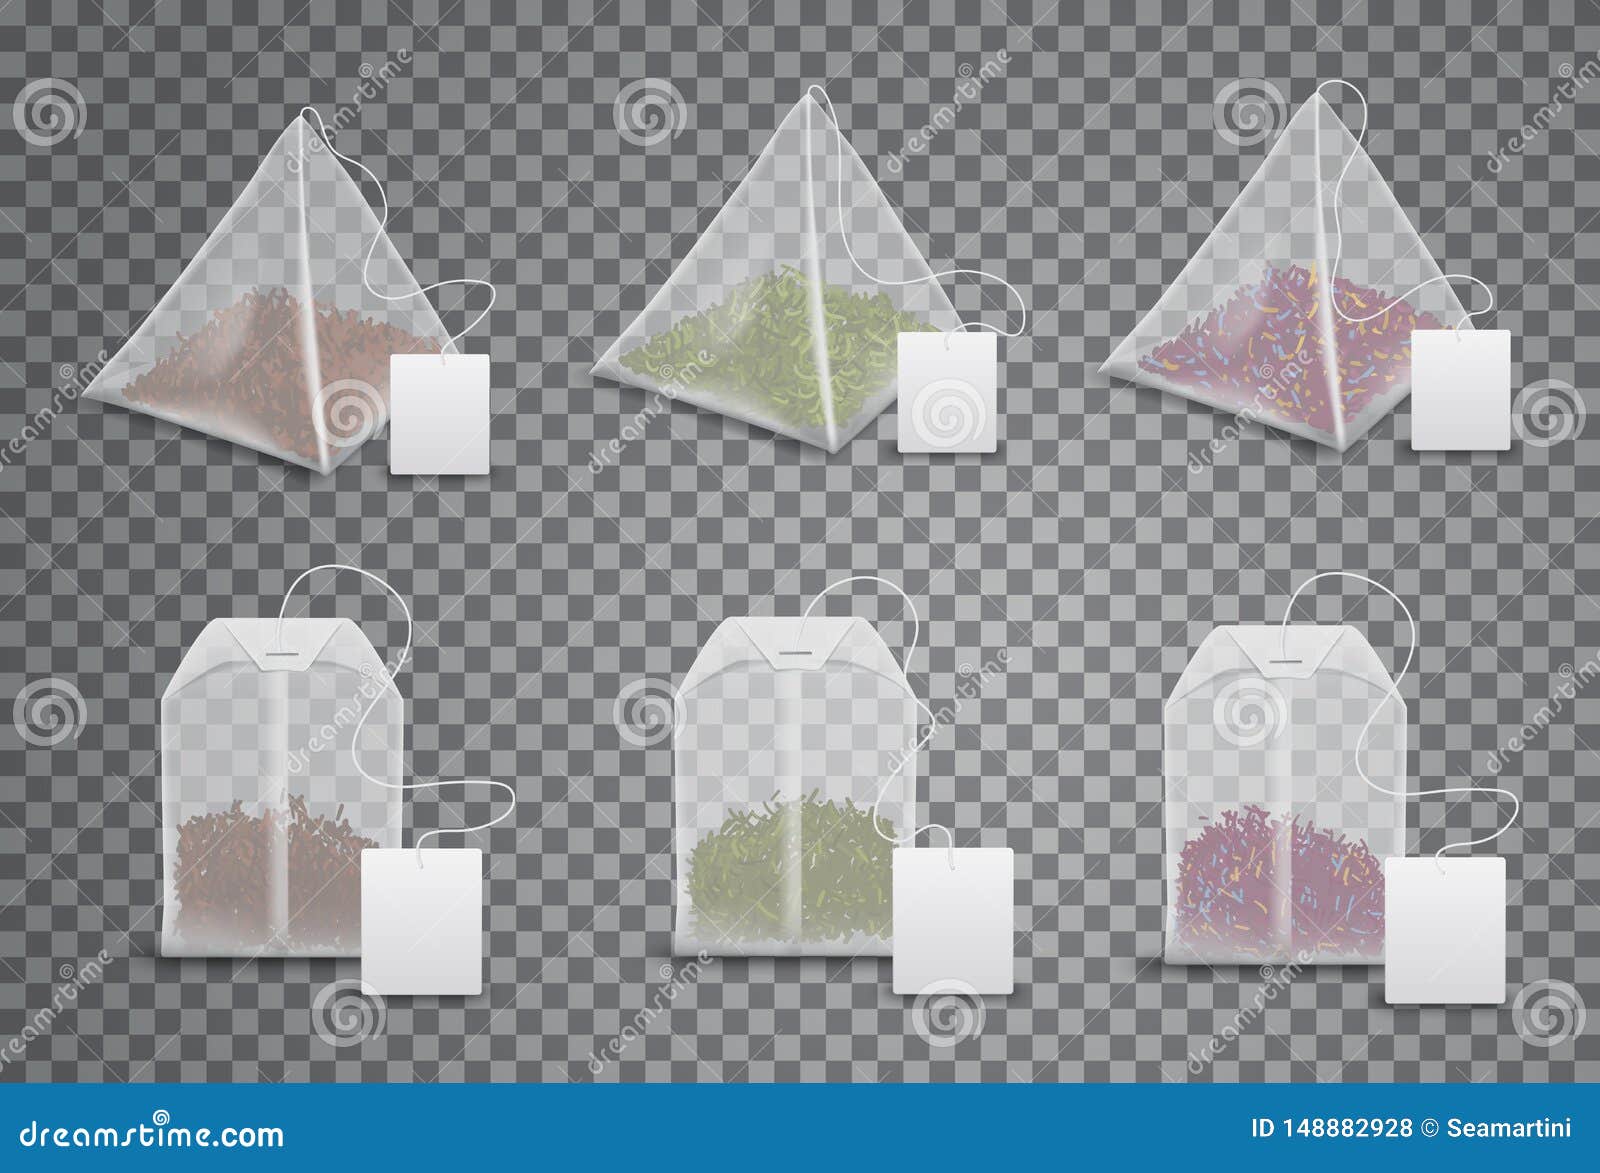 Download Realistic 3D Tea Bags, Teabags Template Mockups Stock ...